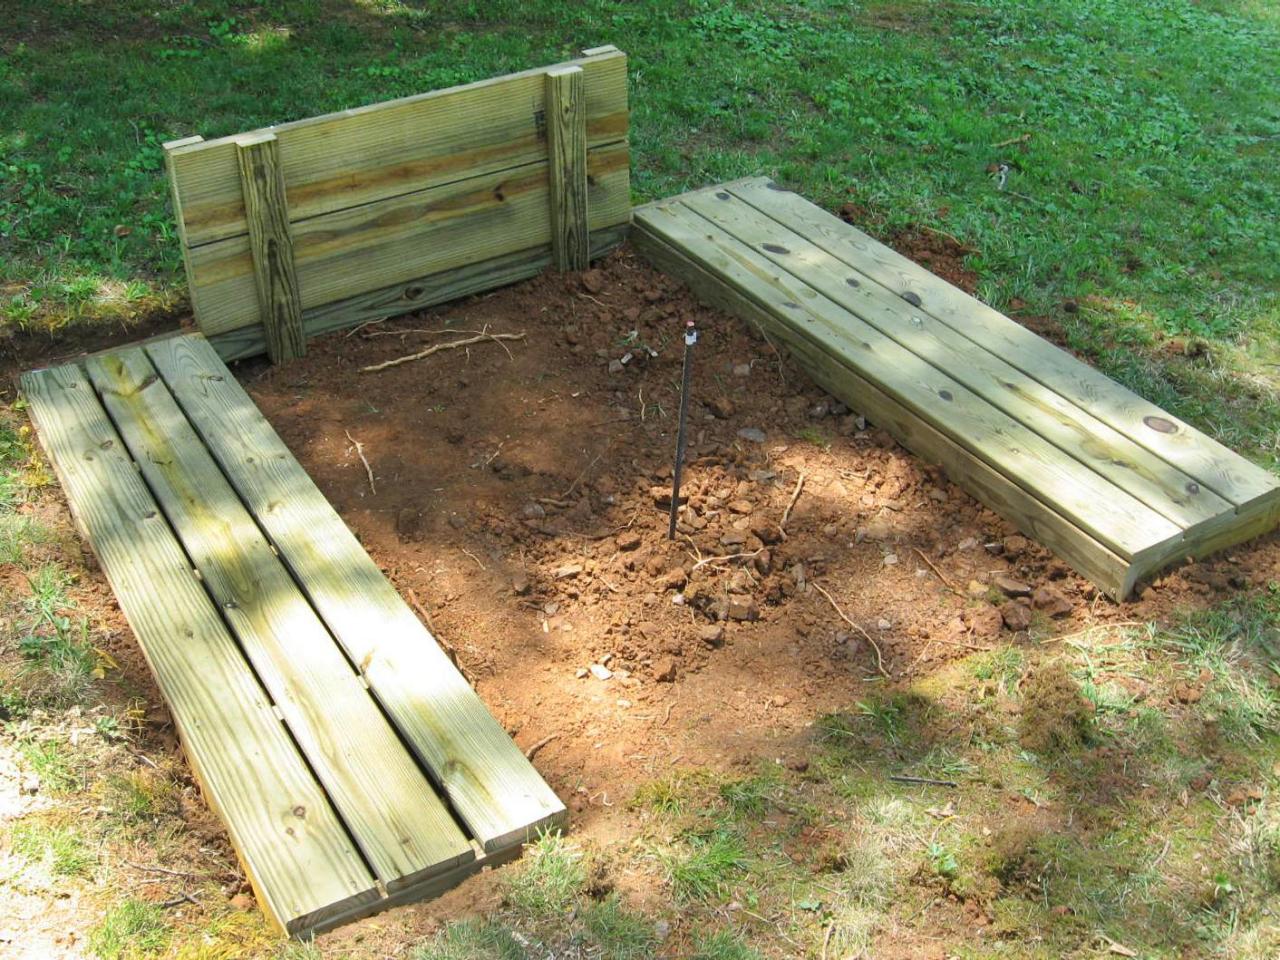 Building a horseshoe pit in backyard